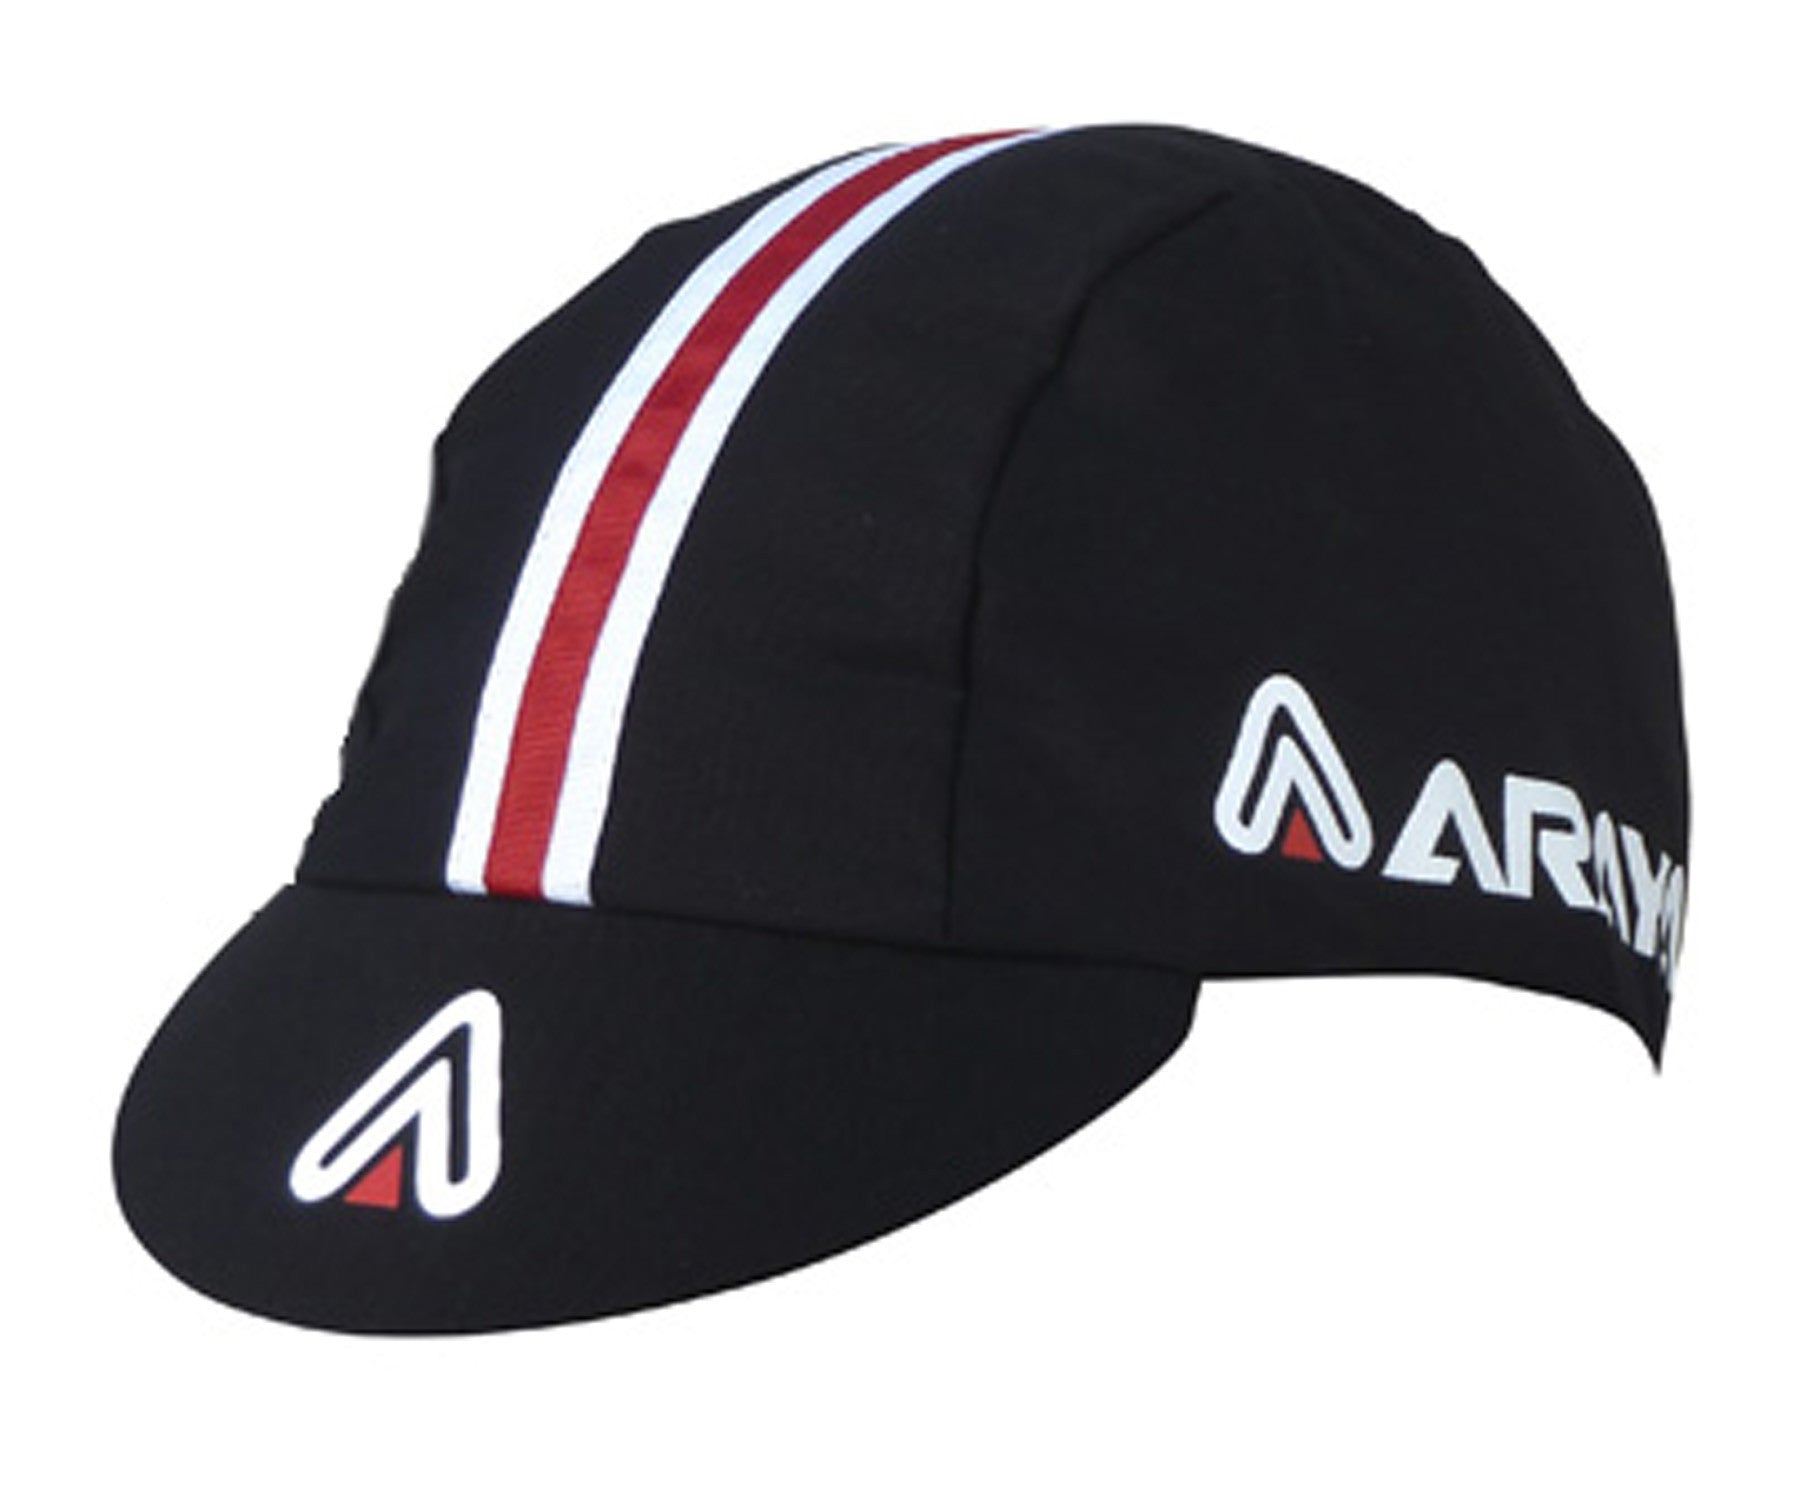 Araya cycling cap - Retrogression Fixed Gear